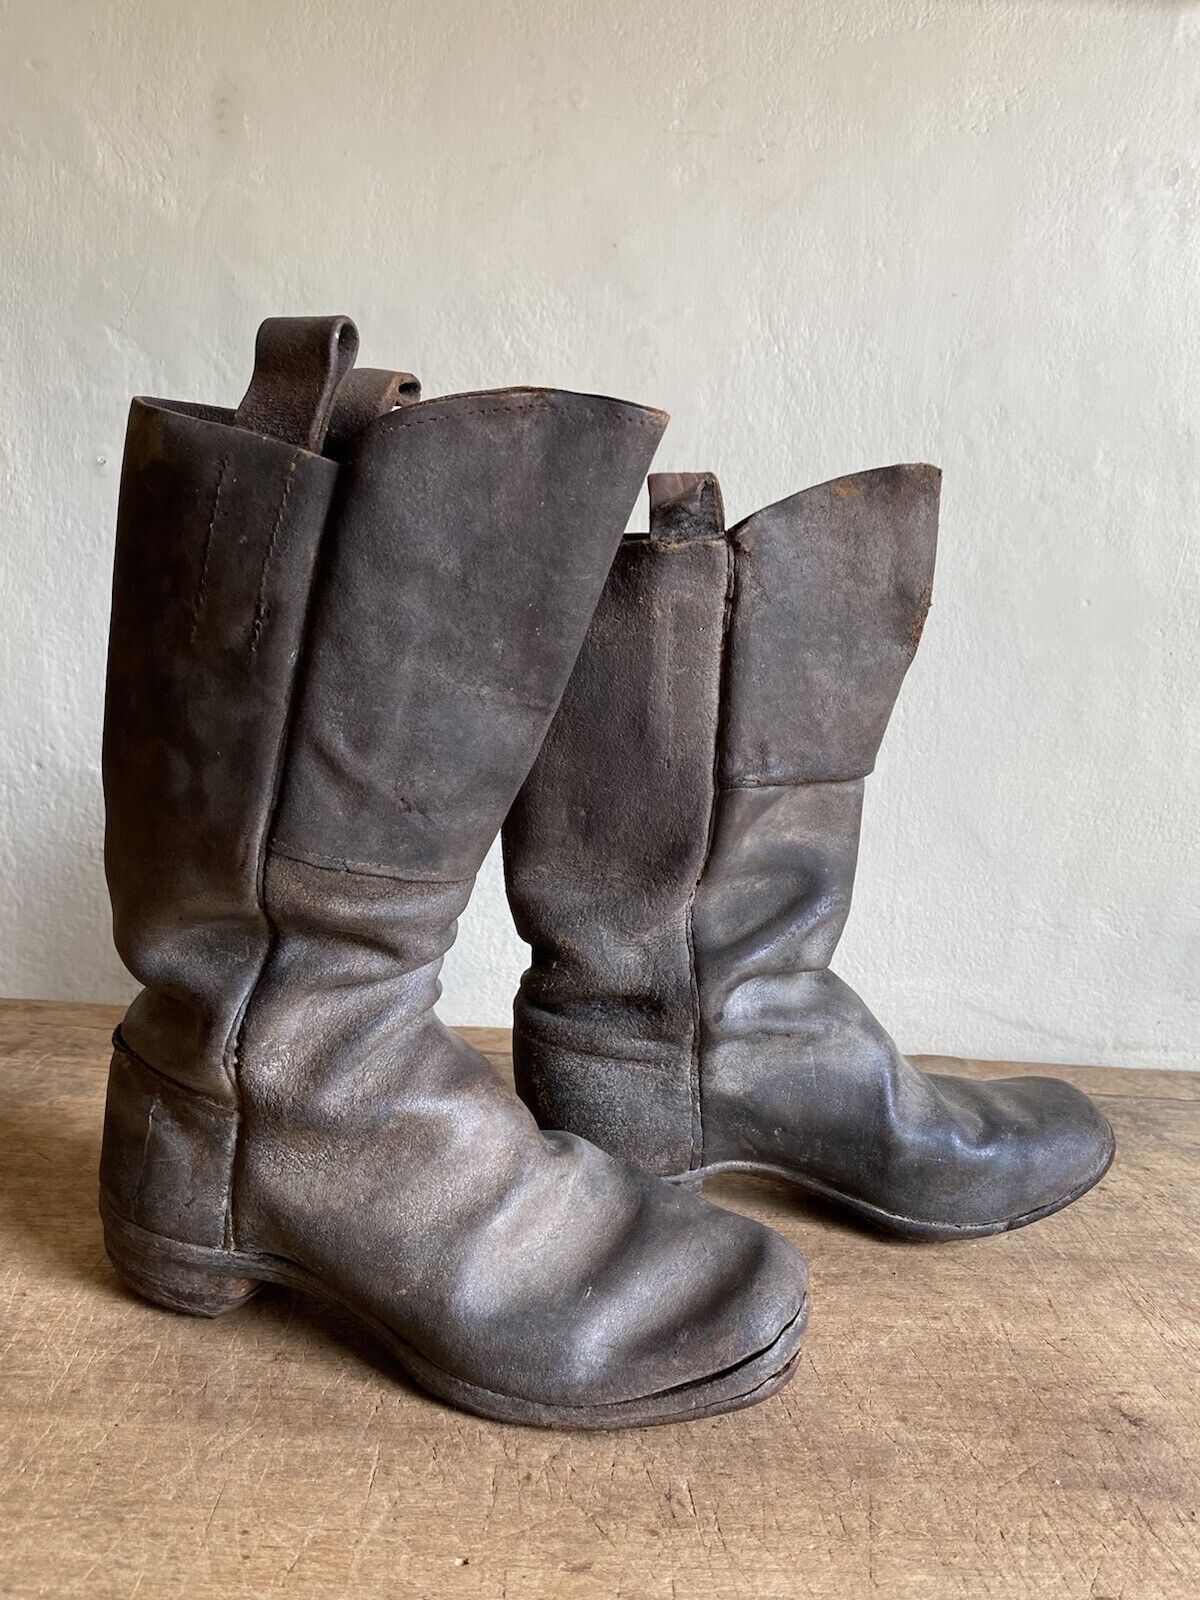 Rare Early Antique Handmade Leather Boots Civil War Era￼ AAFA 19th C